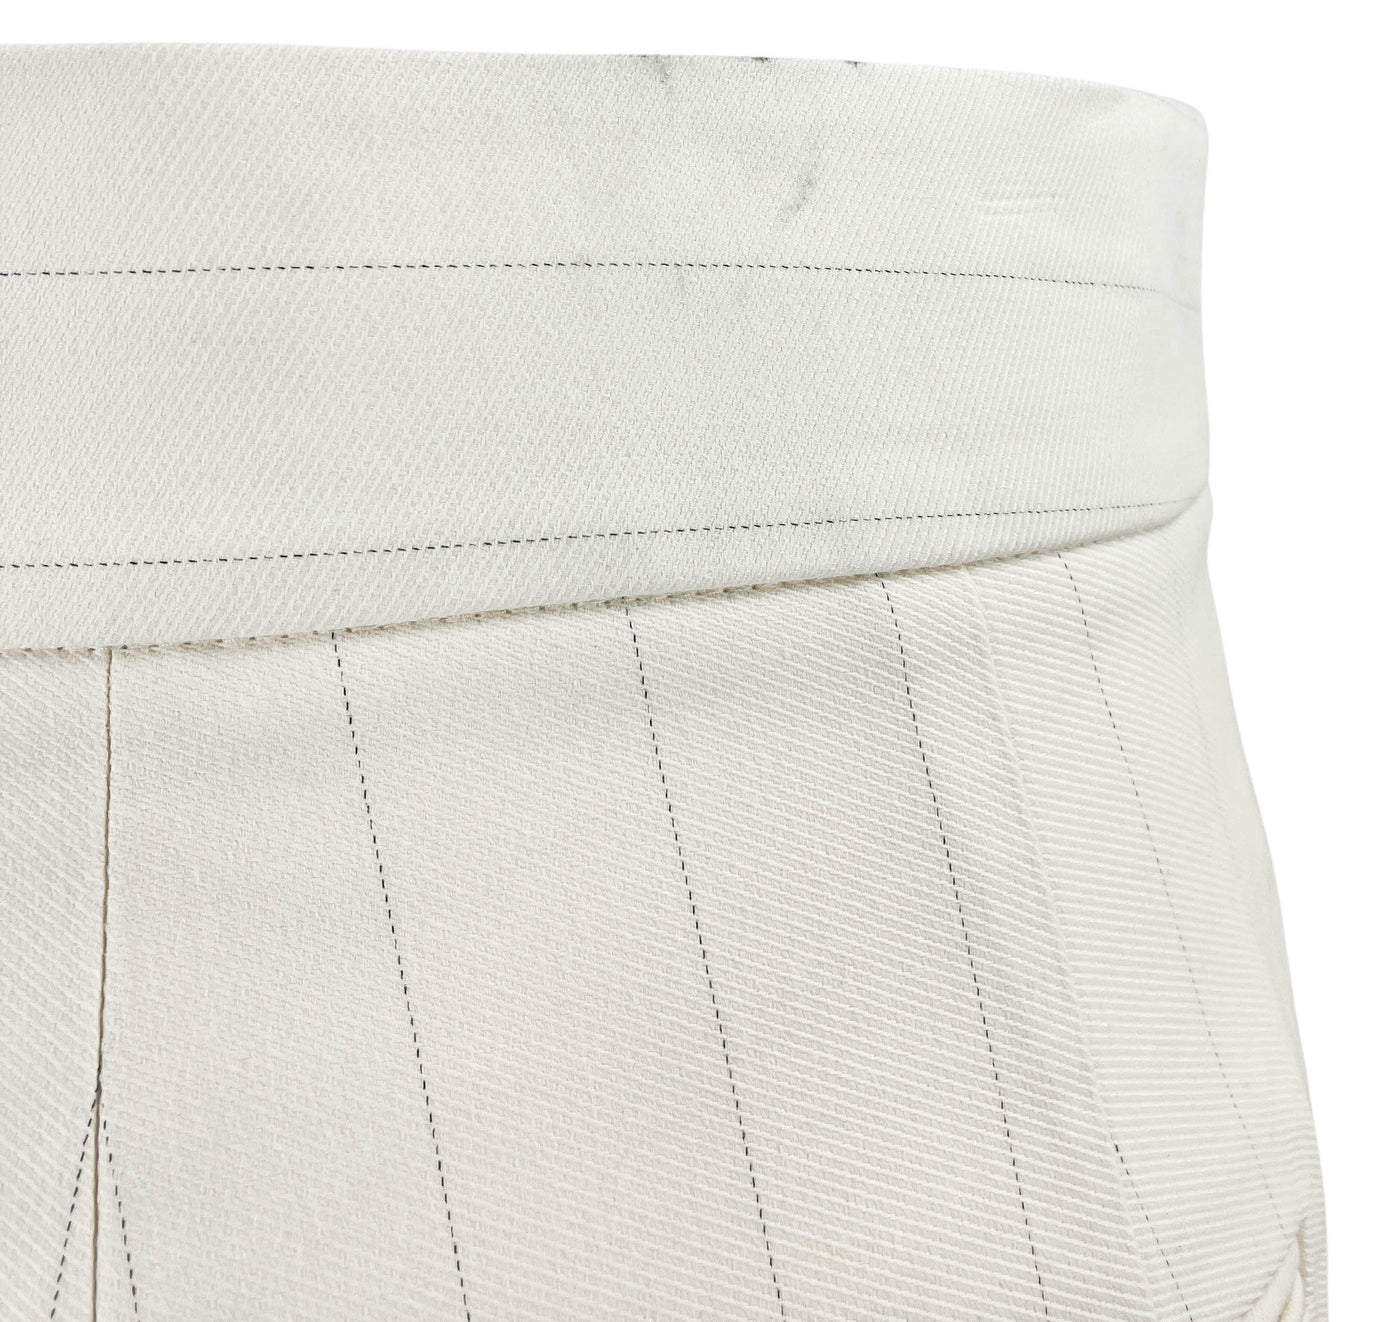 Khaite Banton Pants in Cream and Black Pinstripe - Discounts on Khaite at UAL